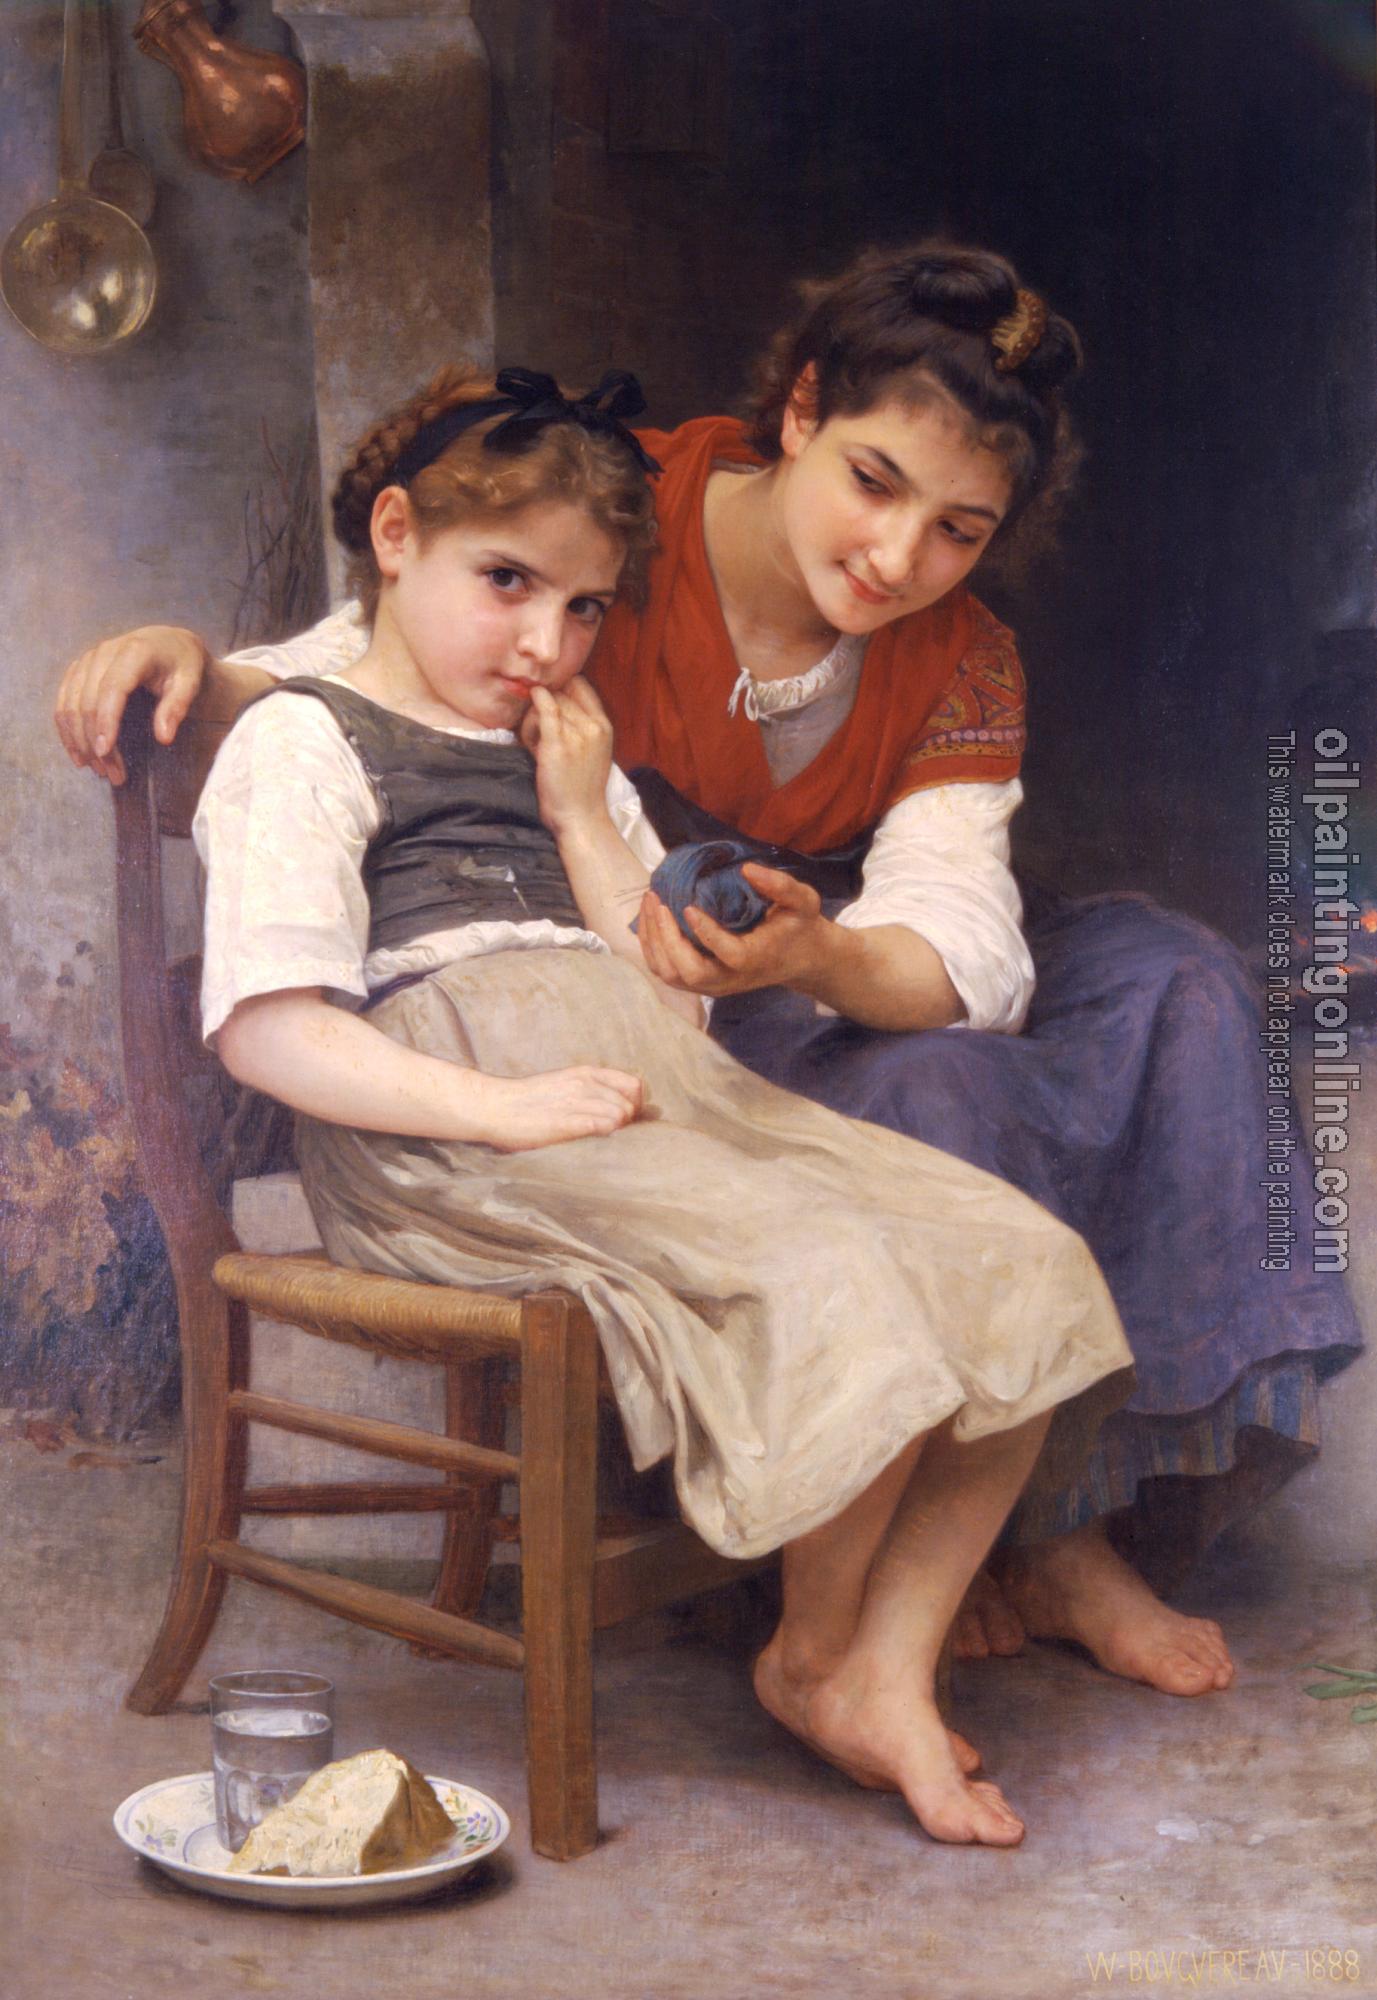 Bouguereau, William-Adolphe - The little sulk